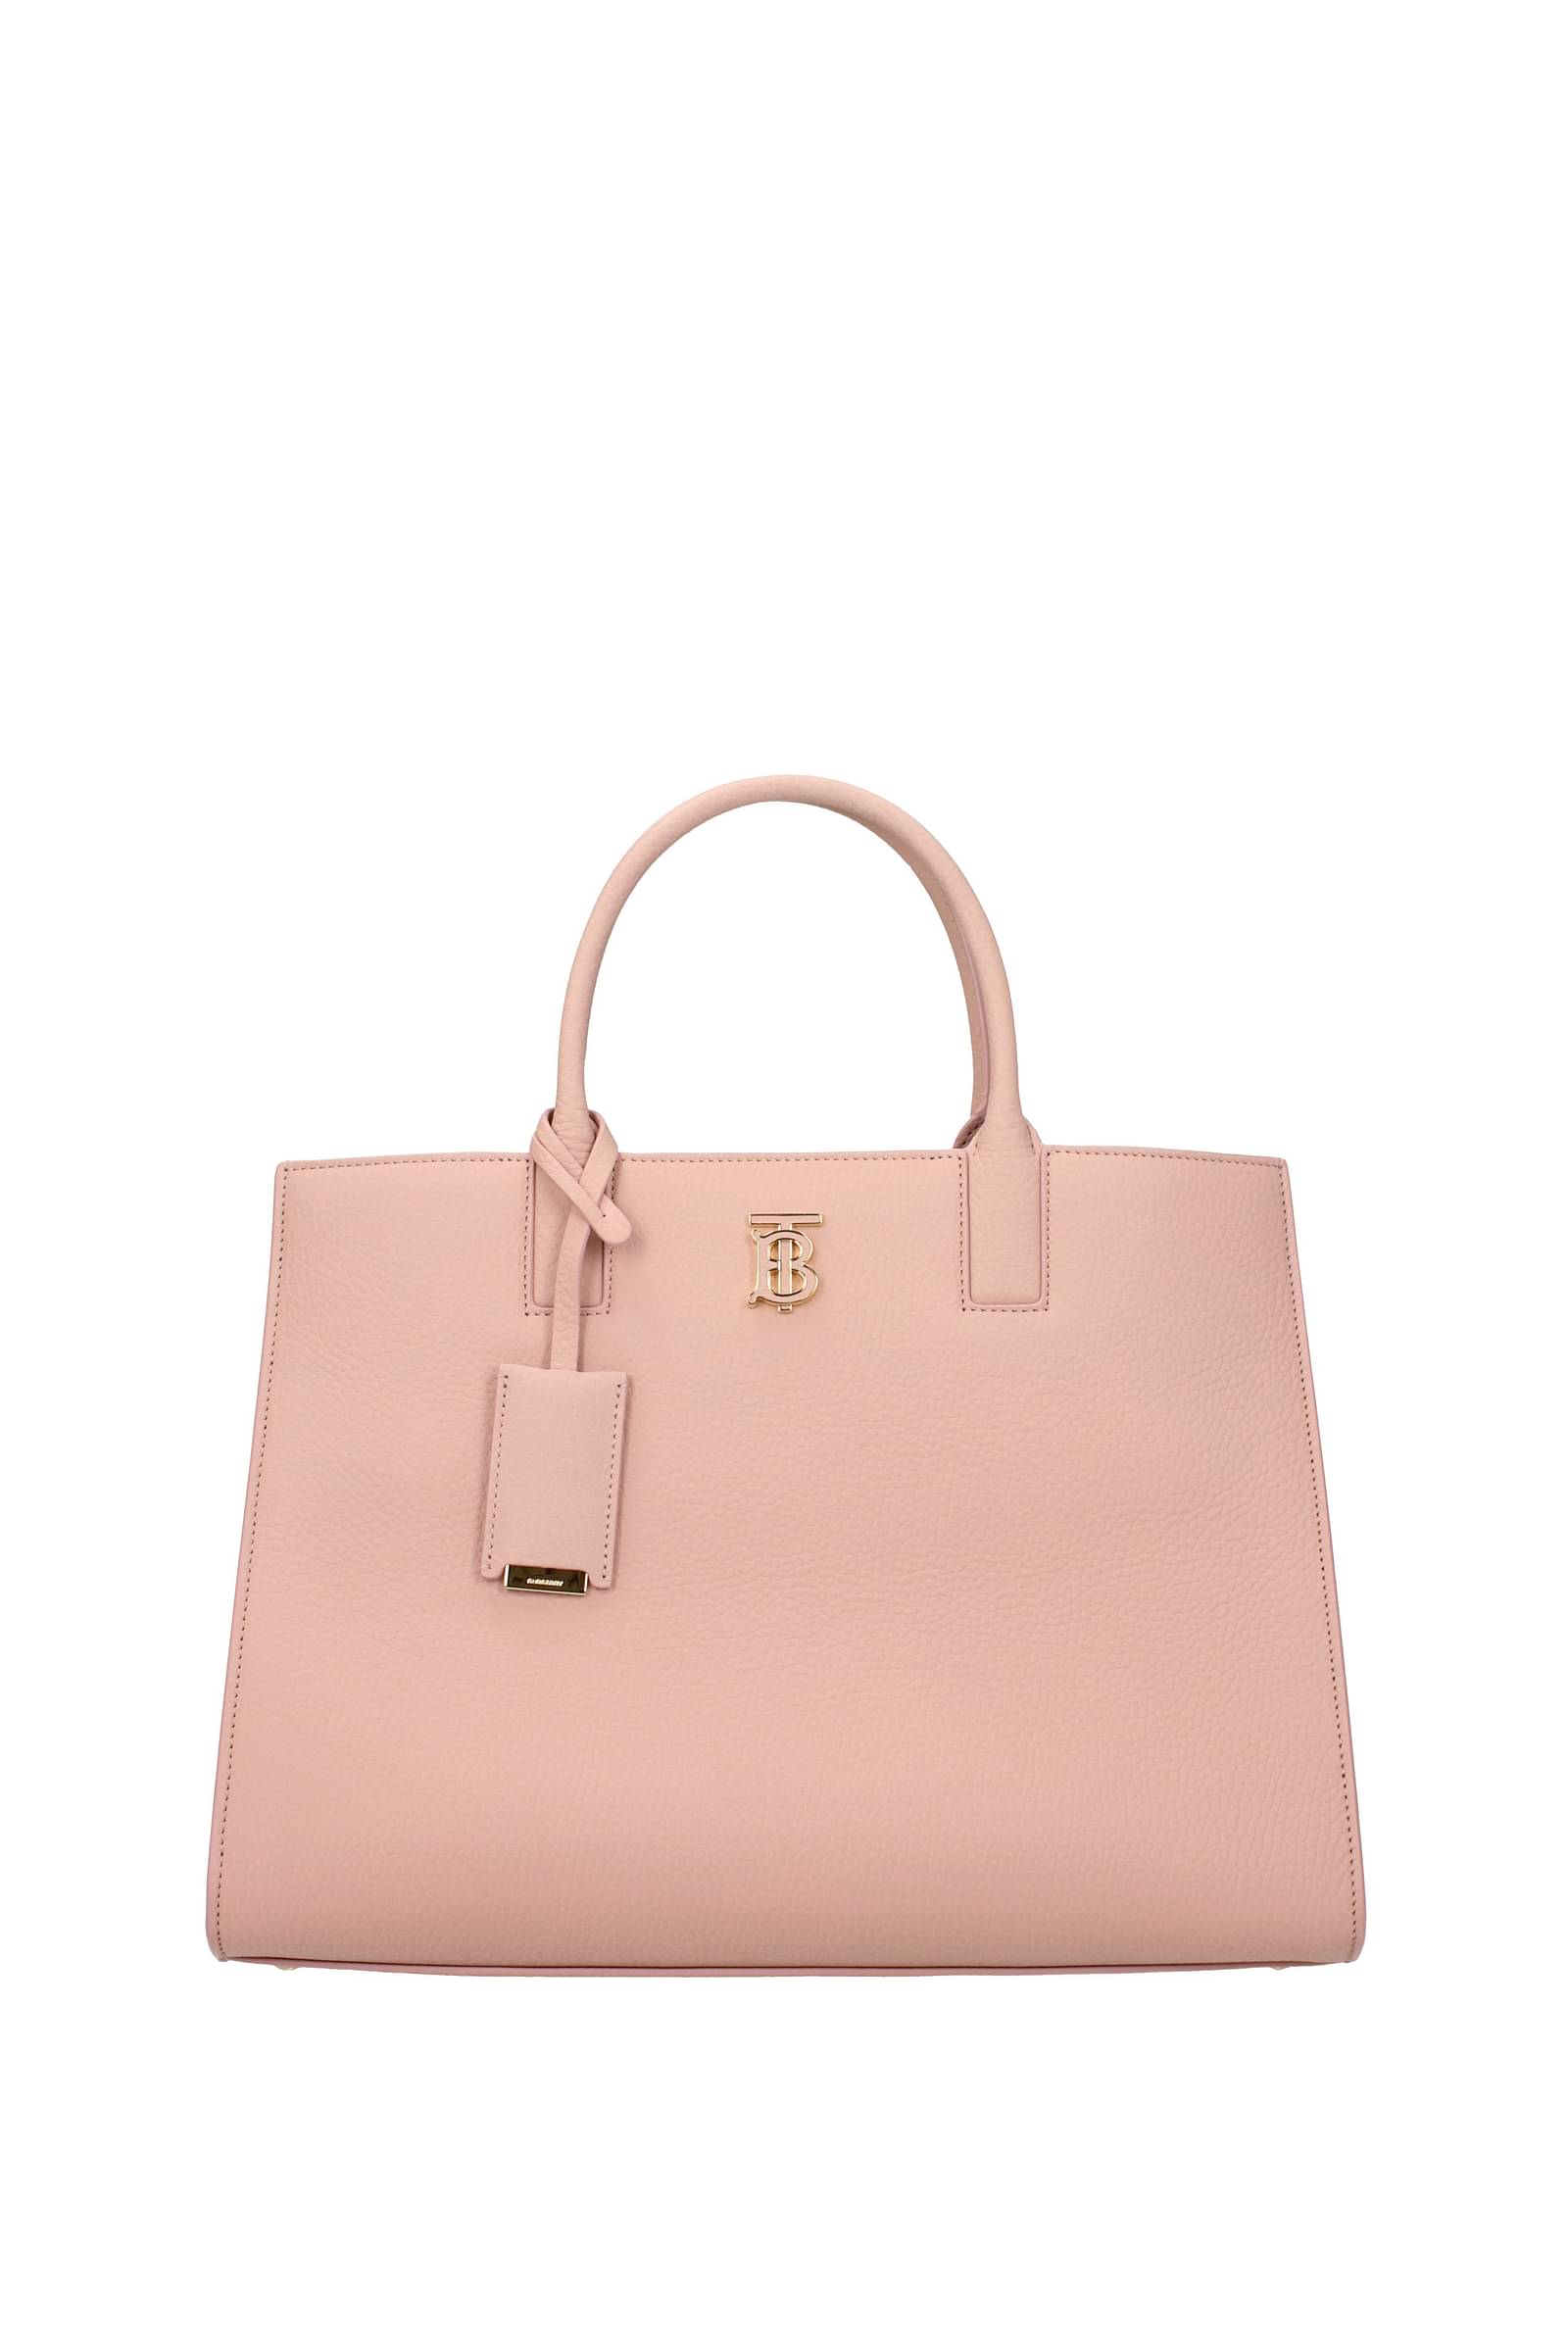 Buy Burberry Bags for Women- Latest Styles @ ZALORA SG